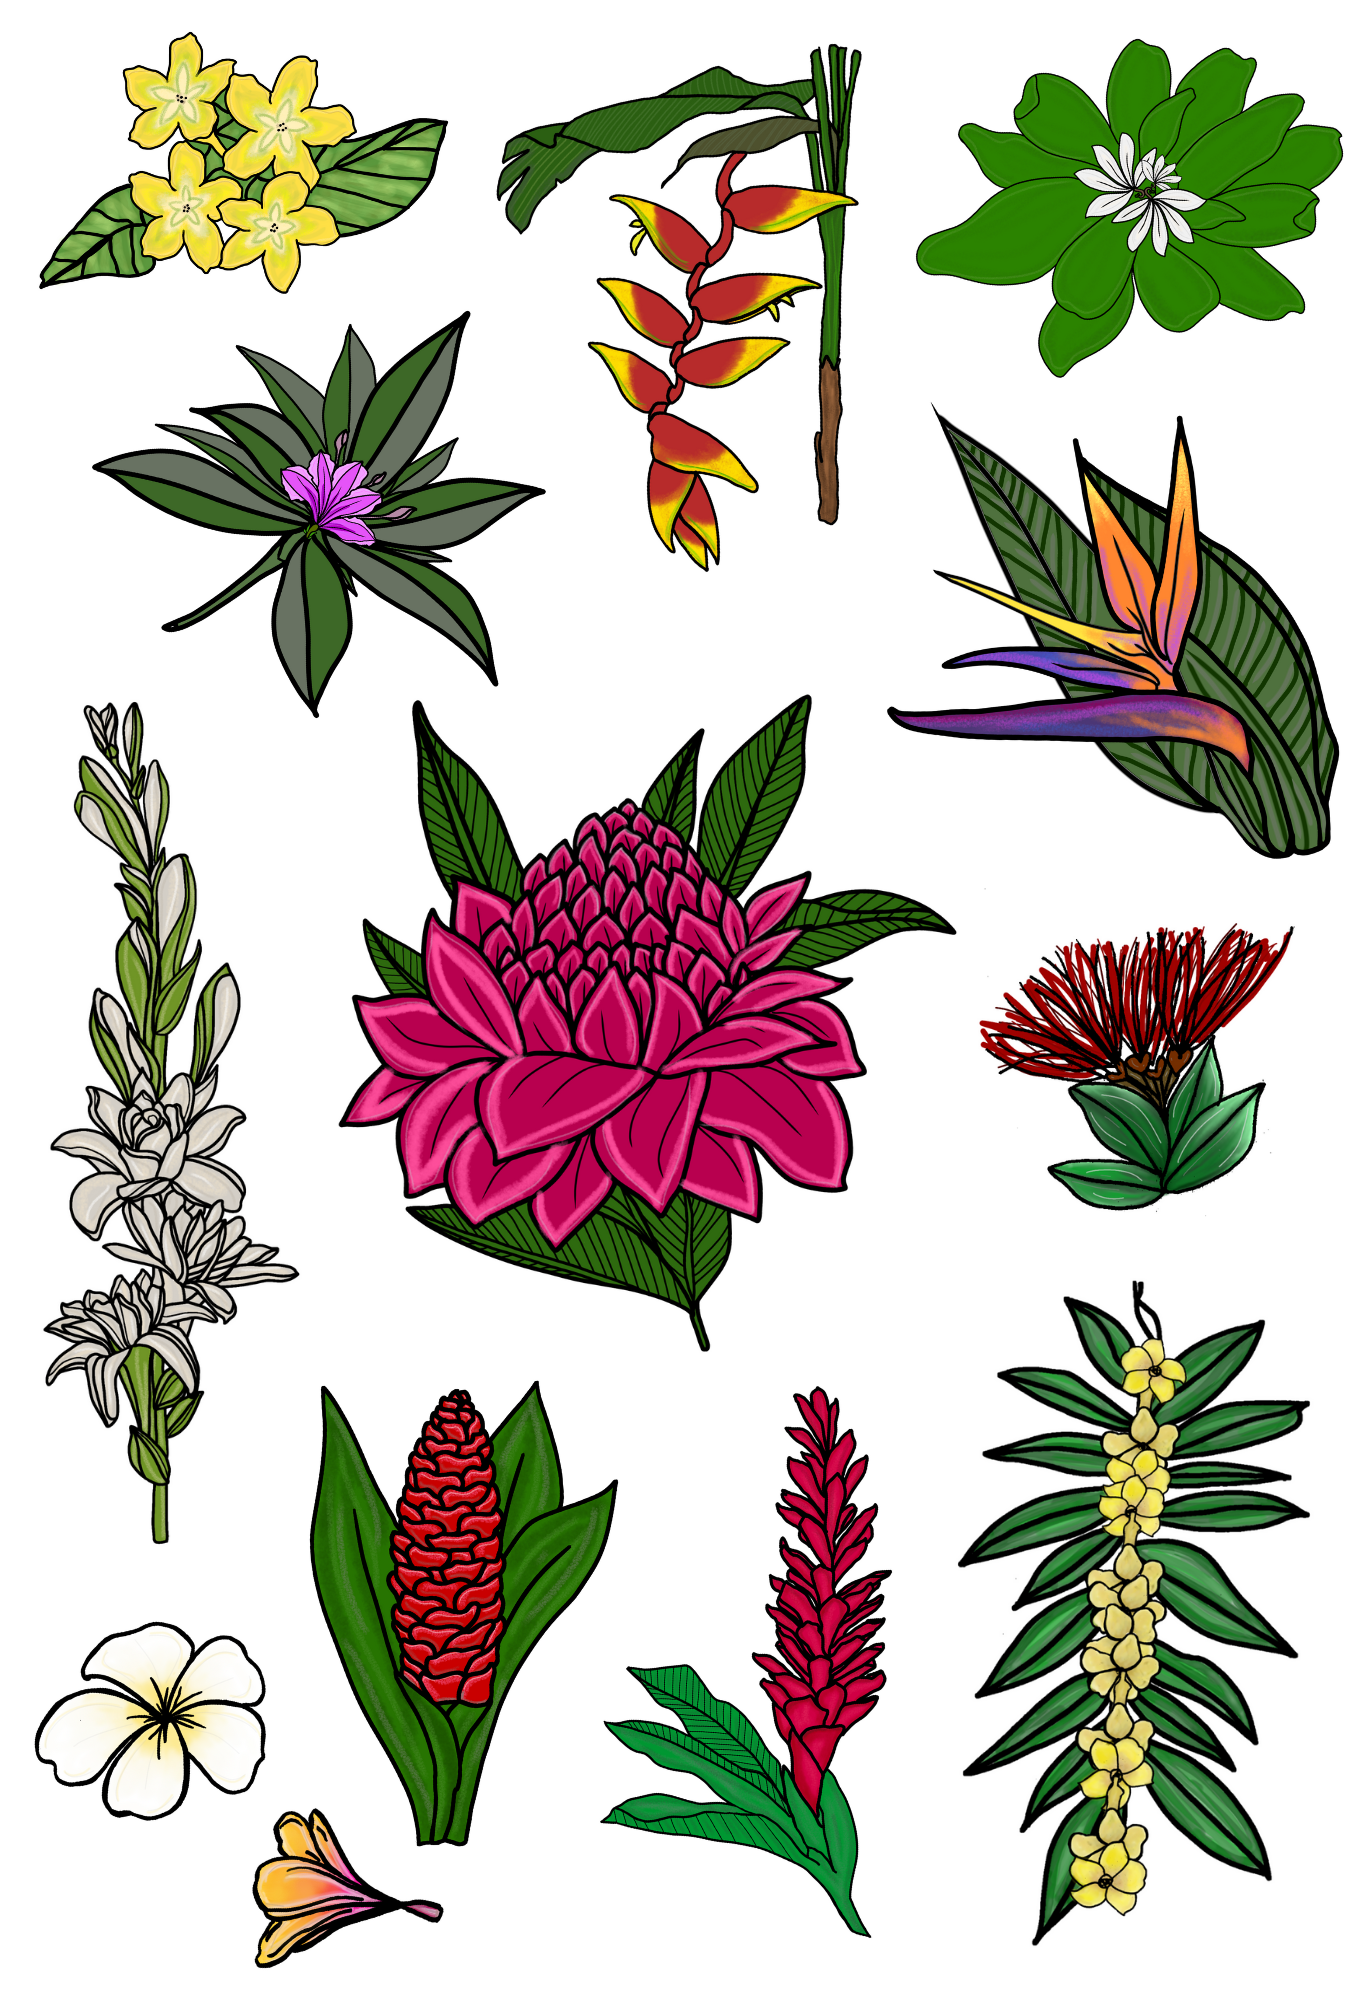 Florals of Hawaii Hand-drawn Sticker Sheet